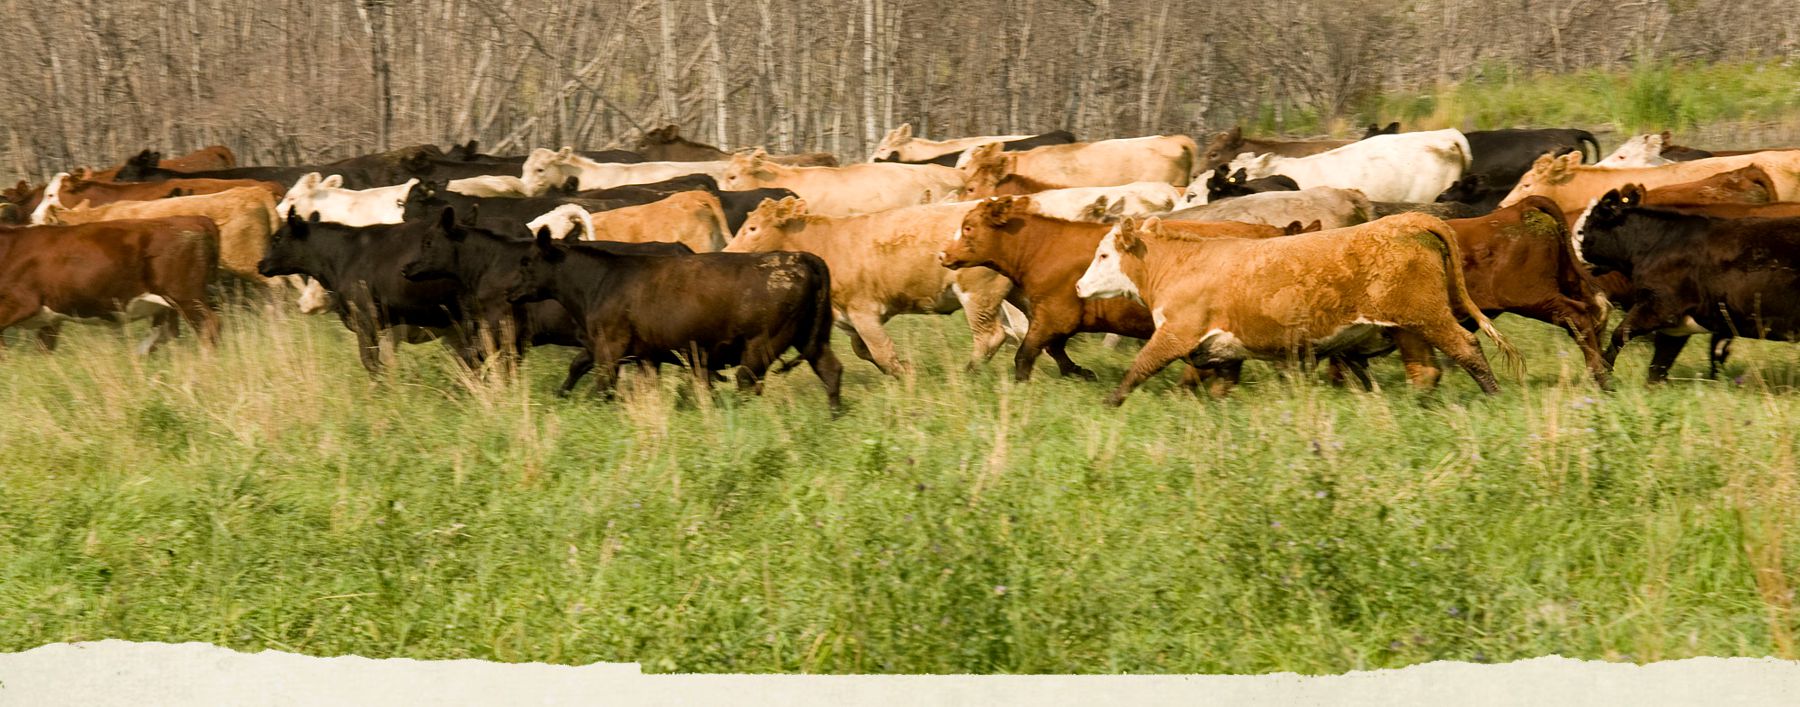 prairie-livestock-banner4